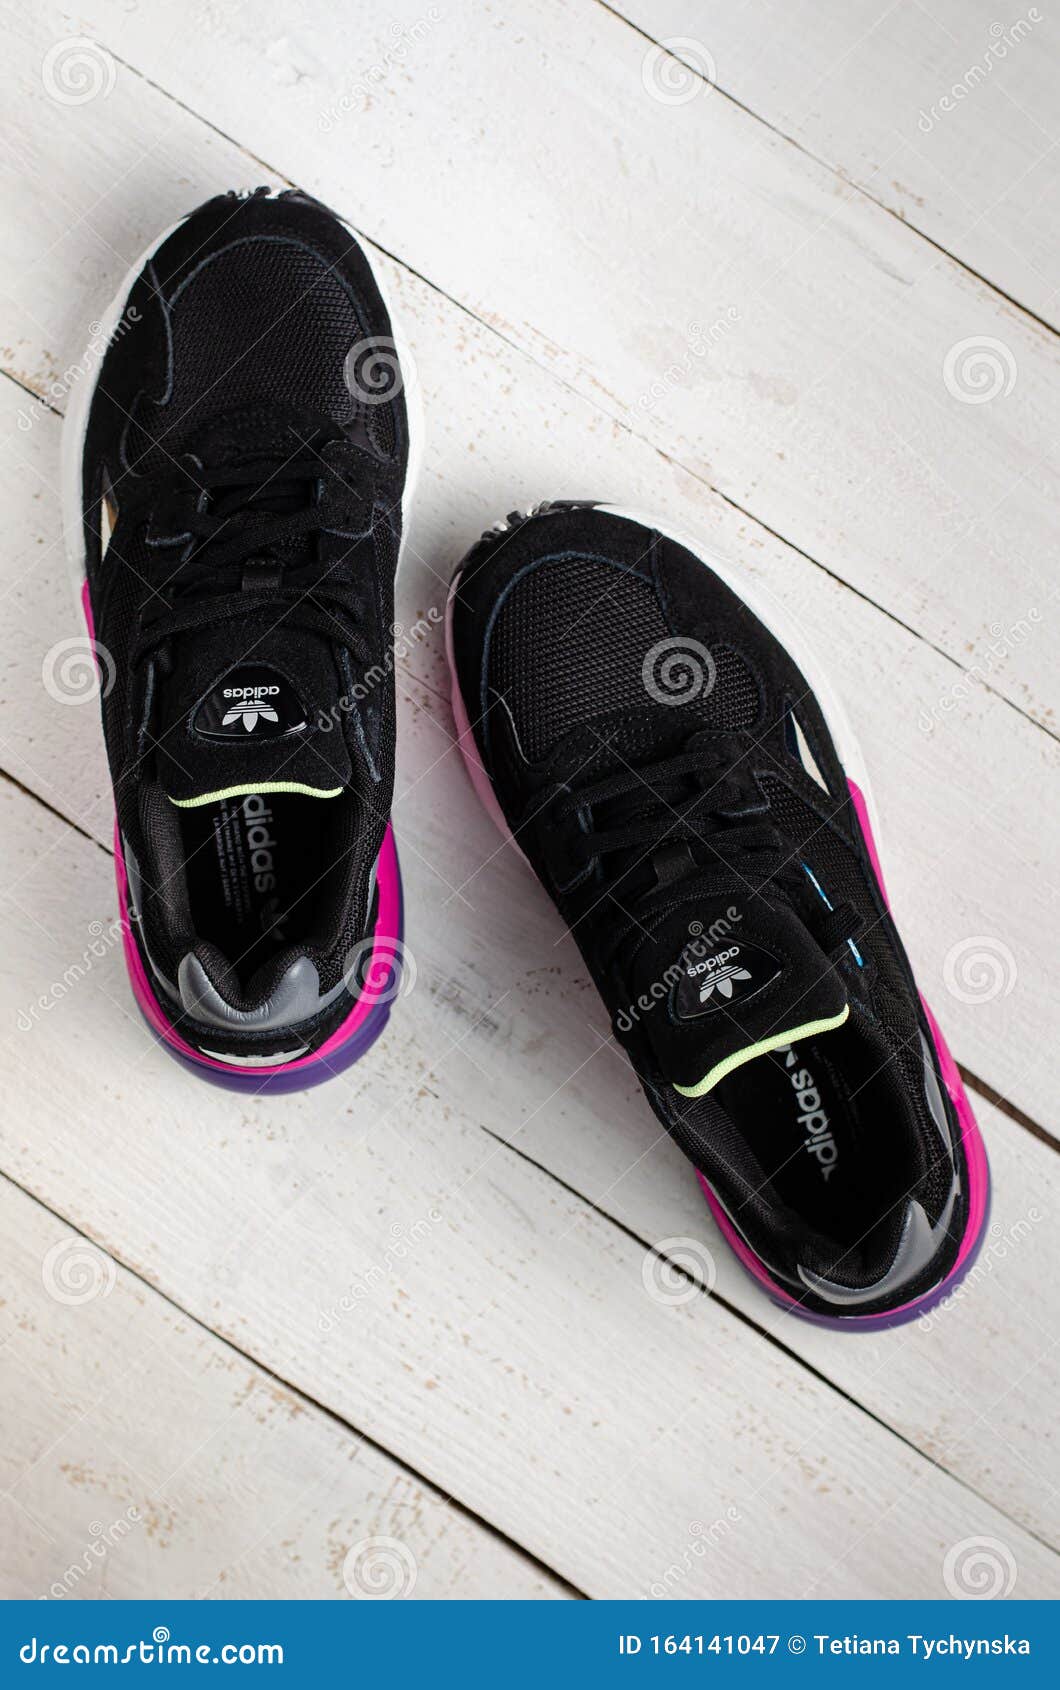 adidas sneakers women 2019